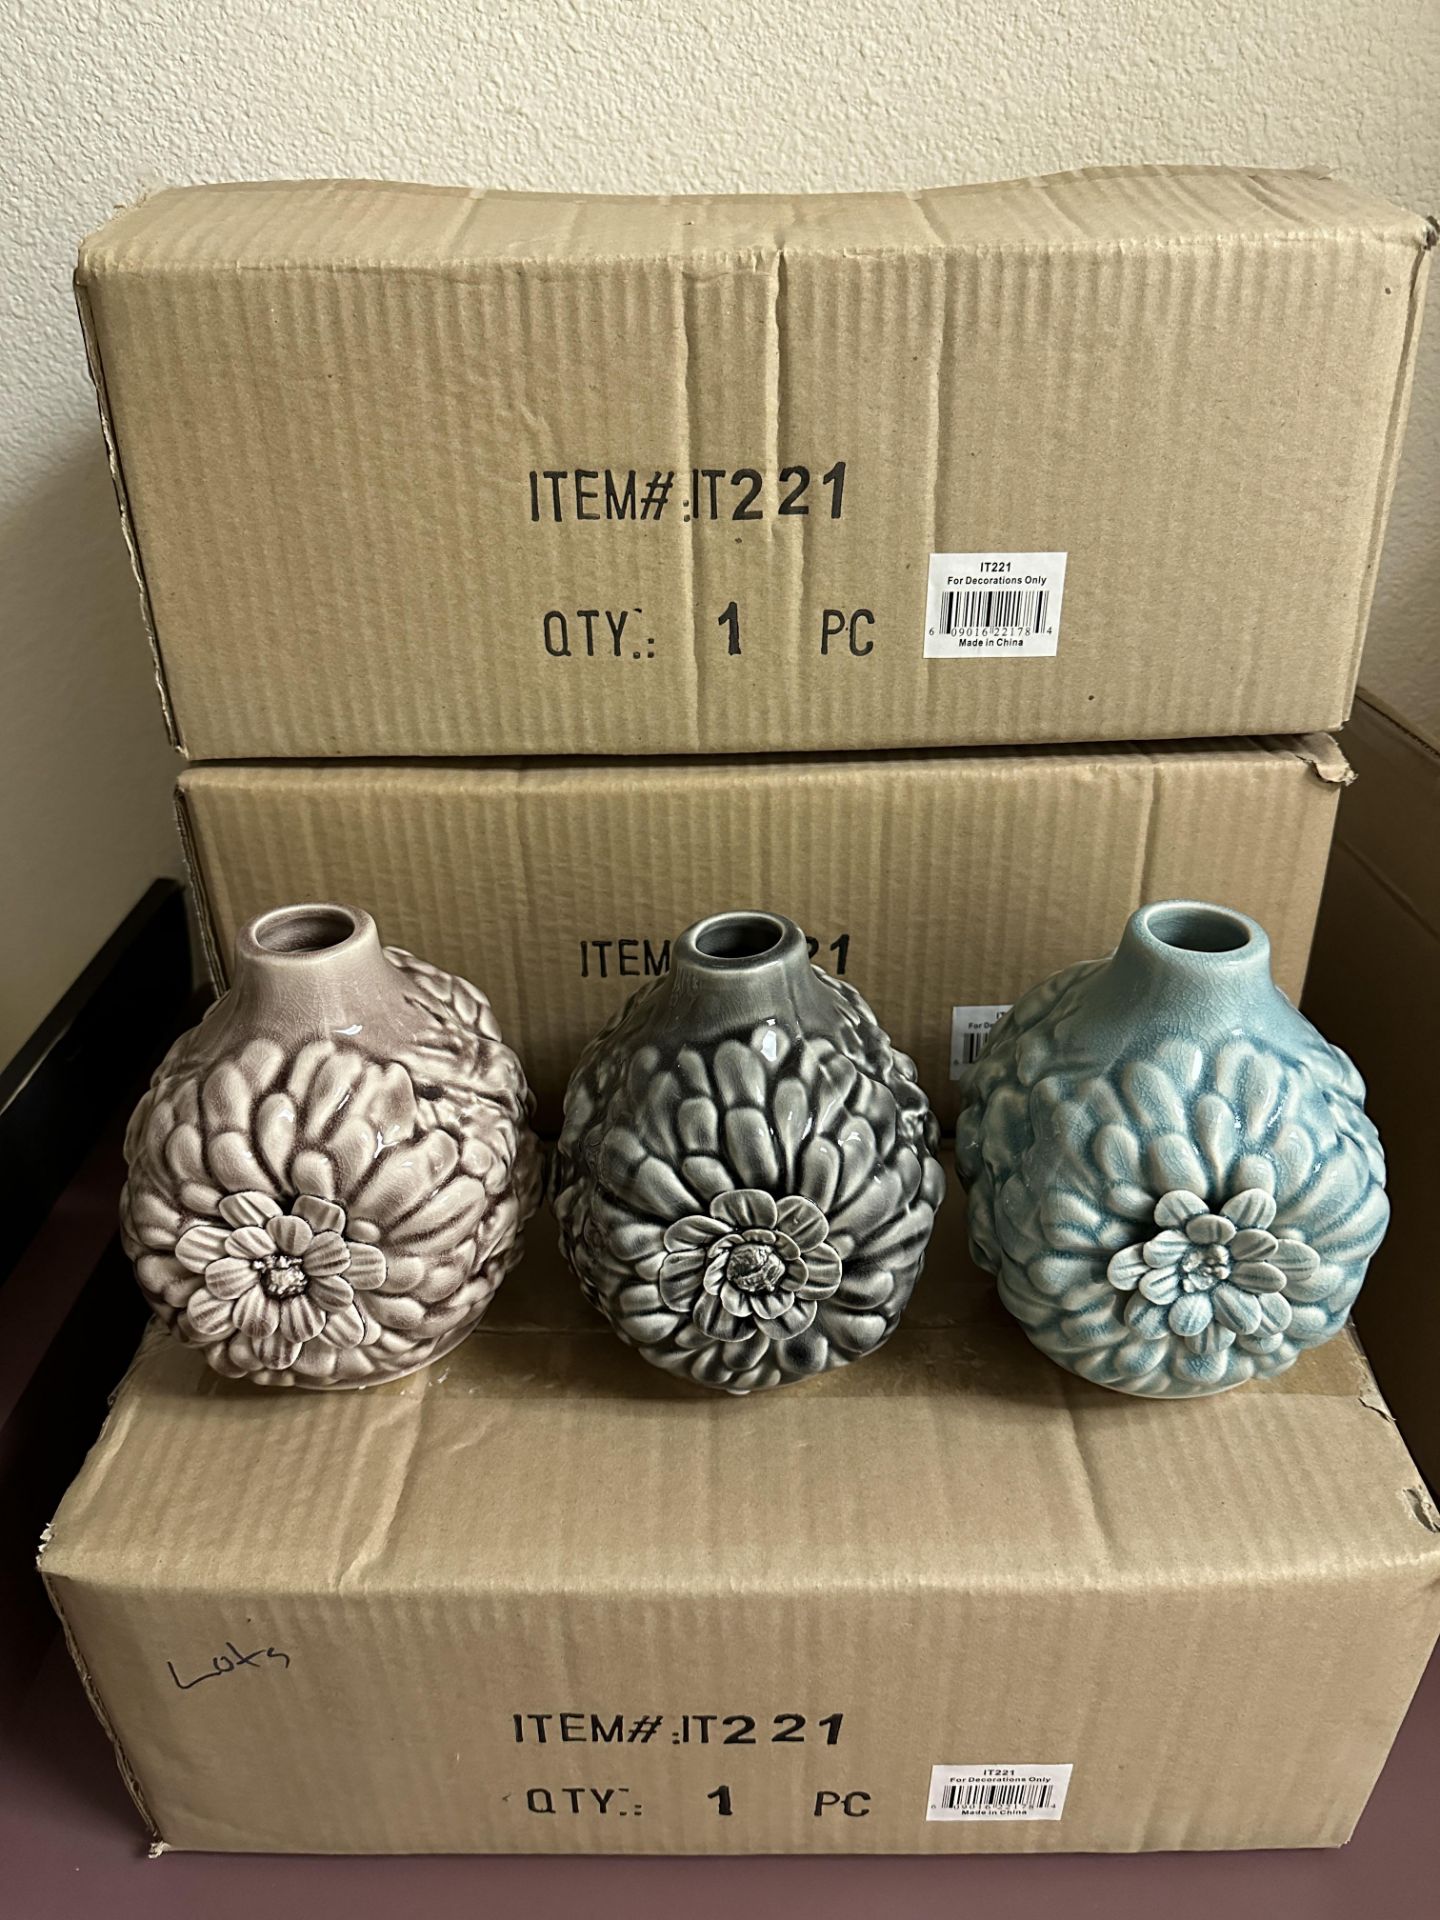 12x Decorative Ceramic Vases with Floral design, 3 different colors, IT221x4